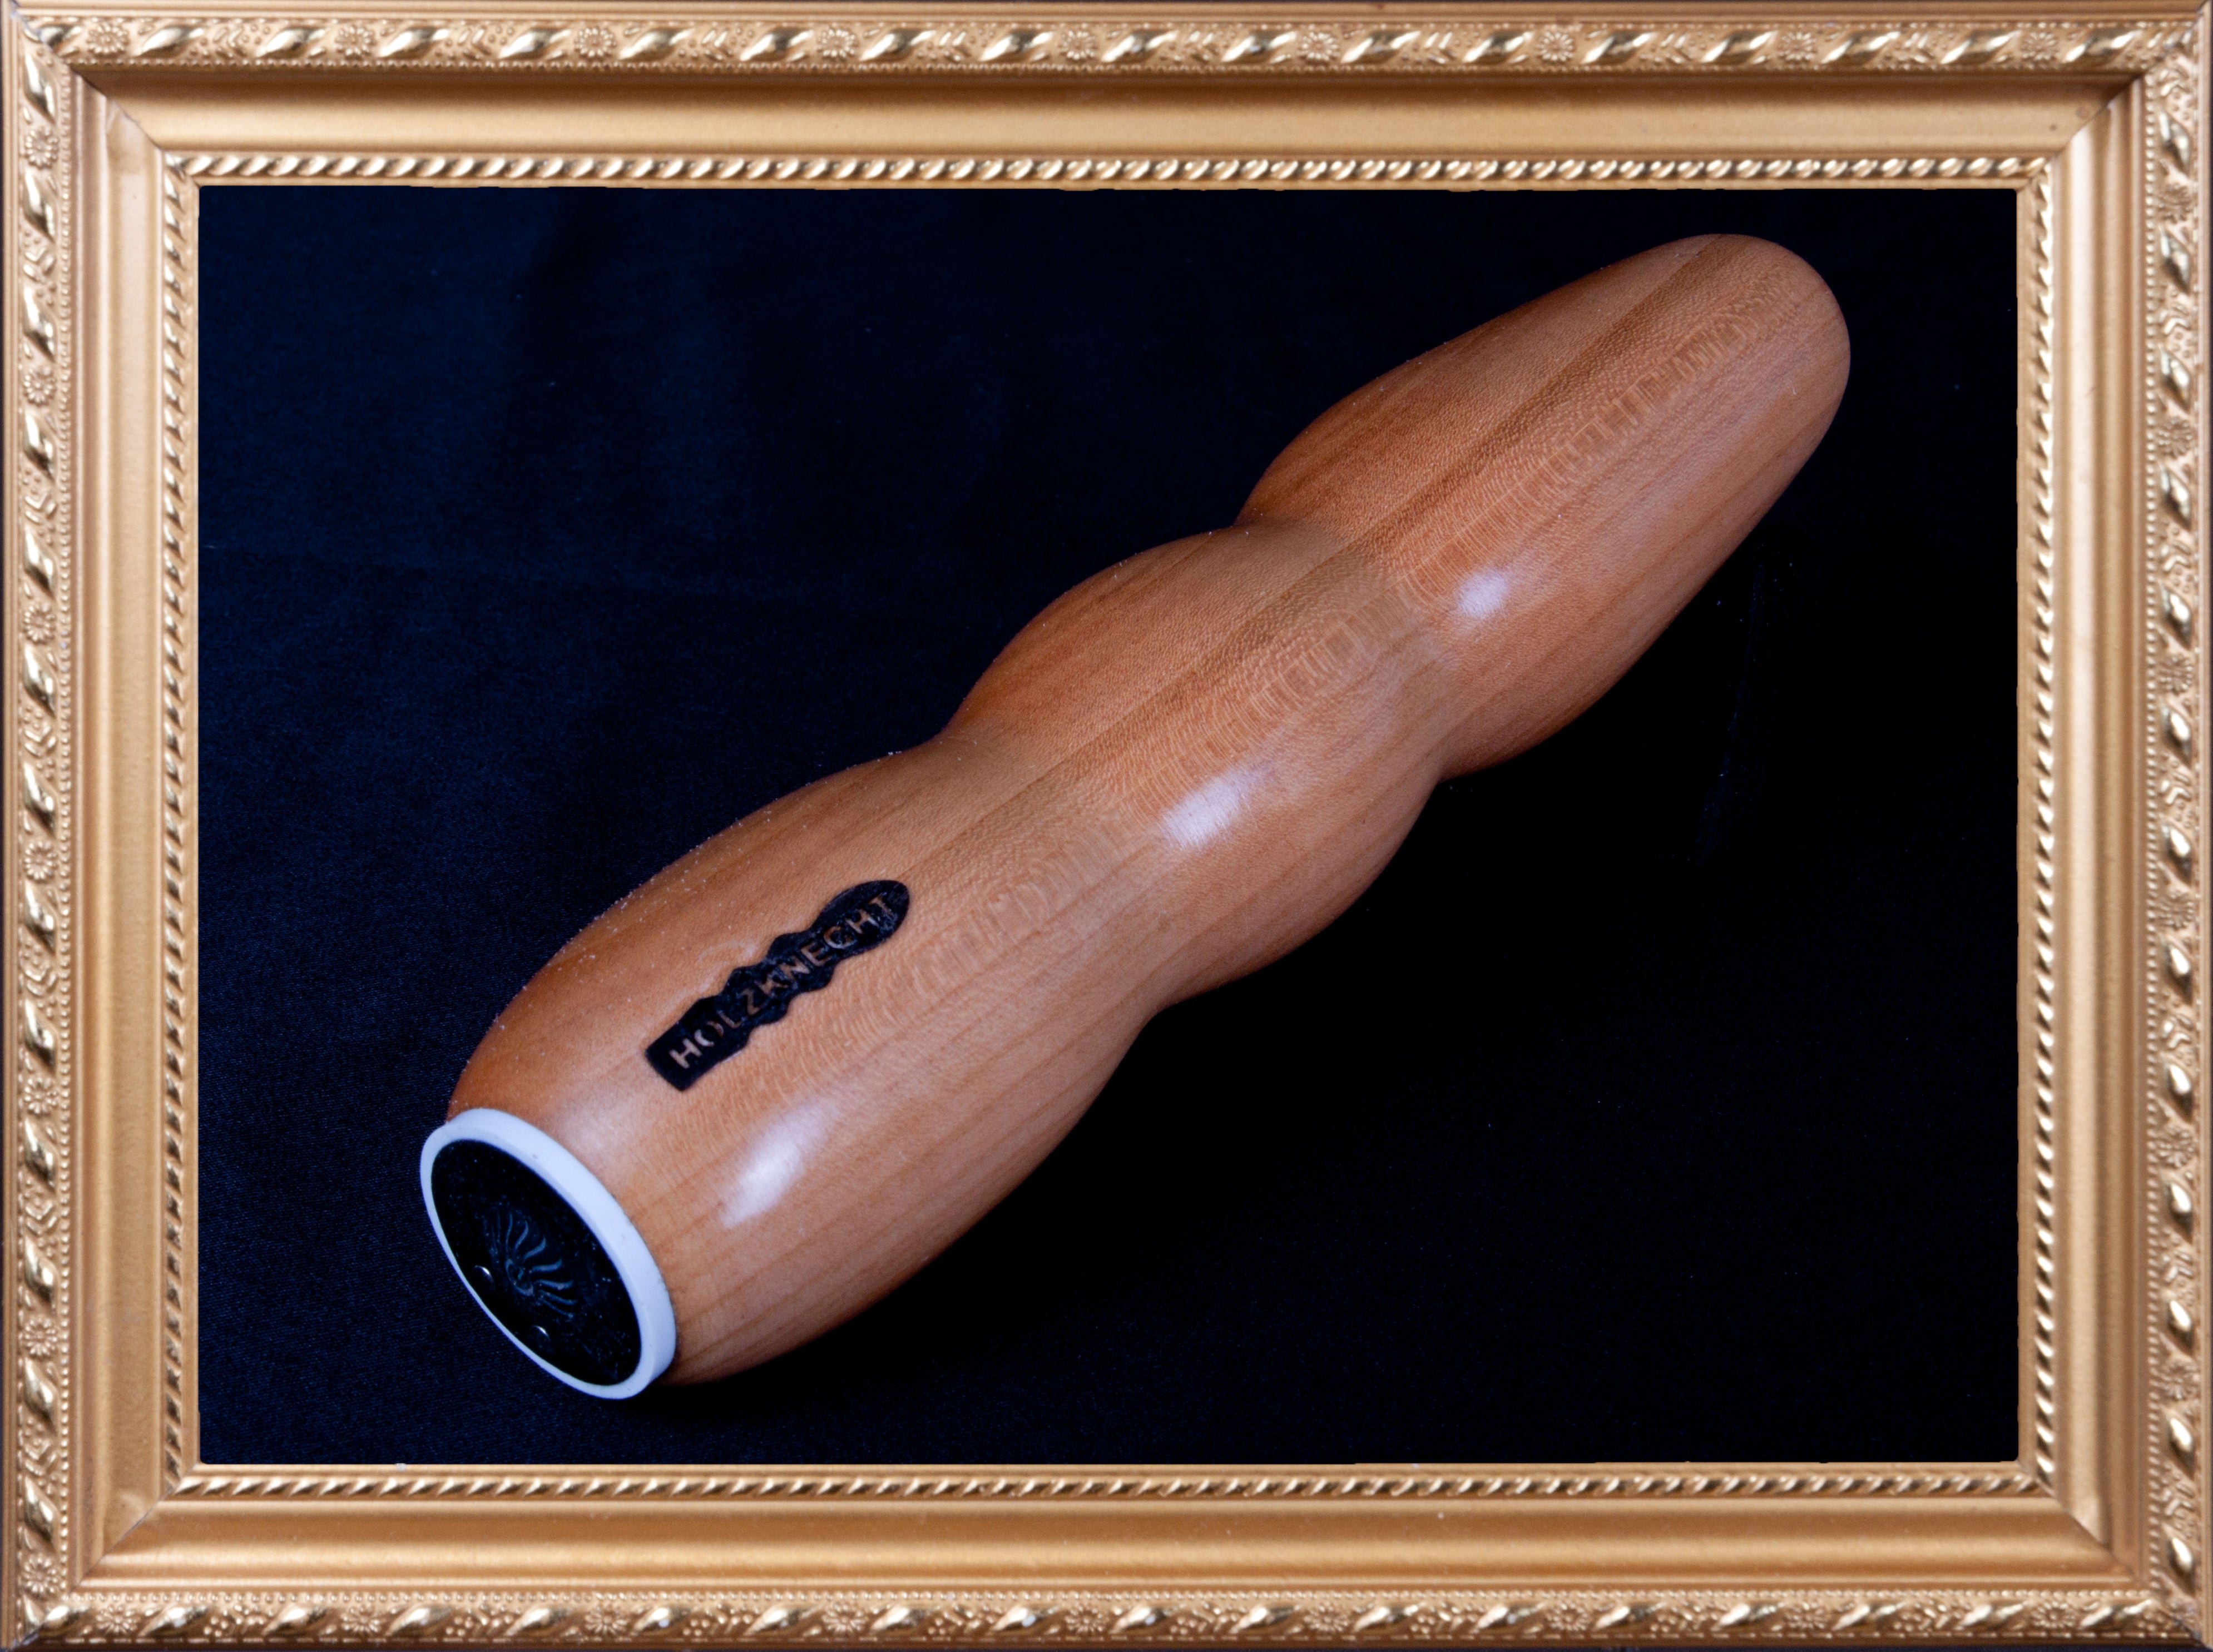 SUMMSI || Kirsche || Holzvibrator || Holzdildo || Sex Toy || Wood Vibrator || handmade by HolzKnecht